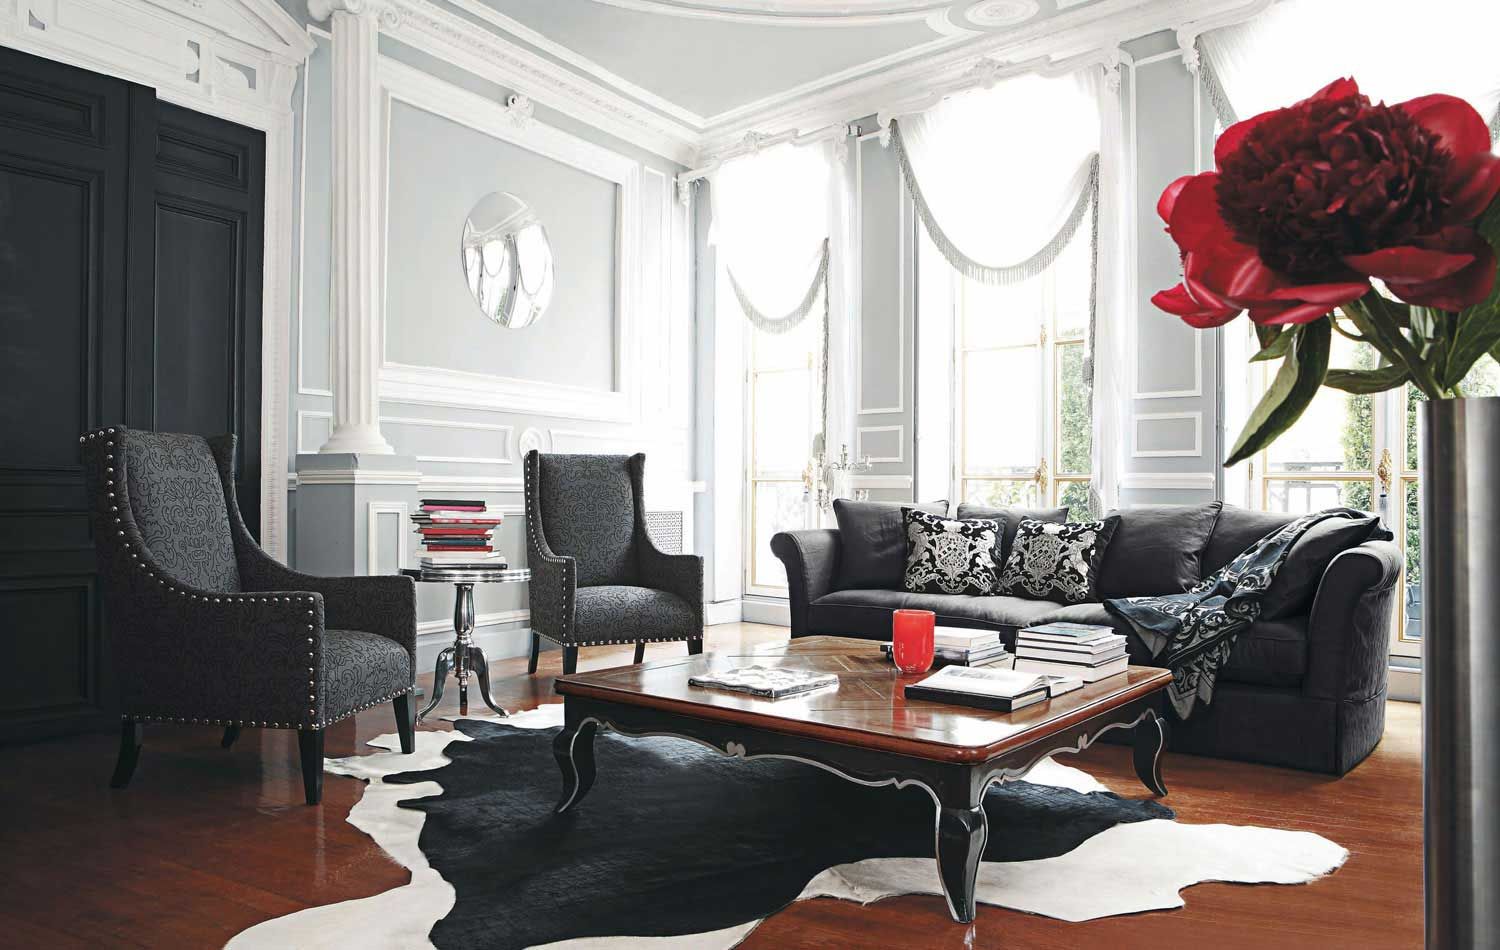 Roche Bobois Élégant Living Room Inspiration 120 Modern sofas by Roche Bobois